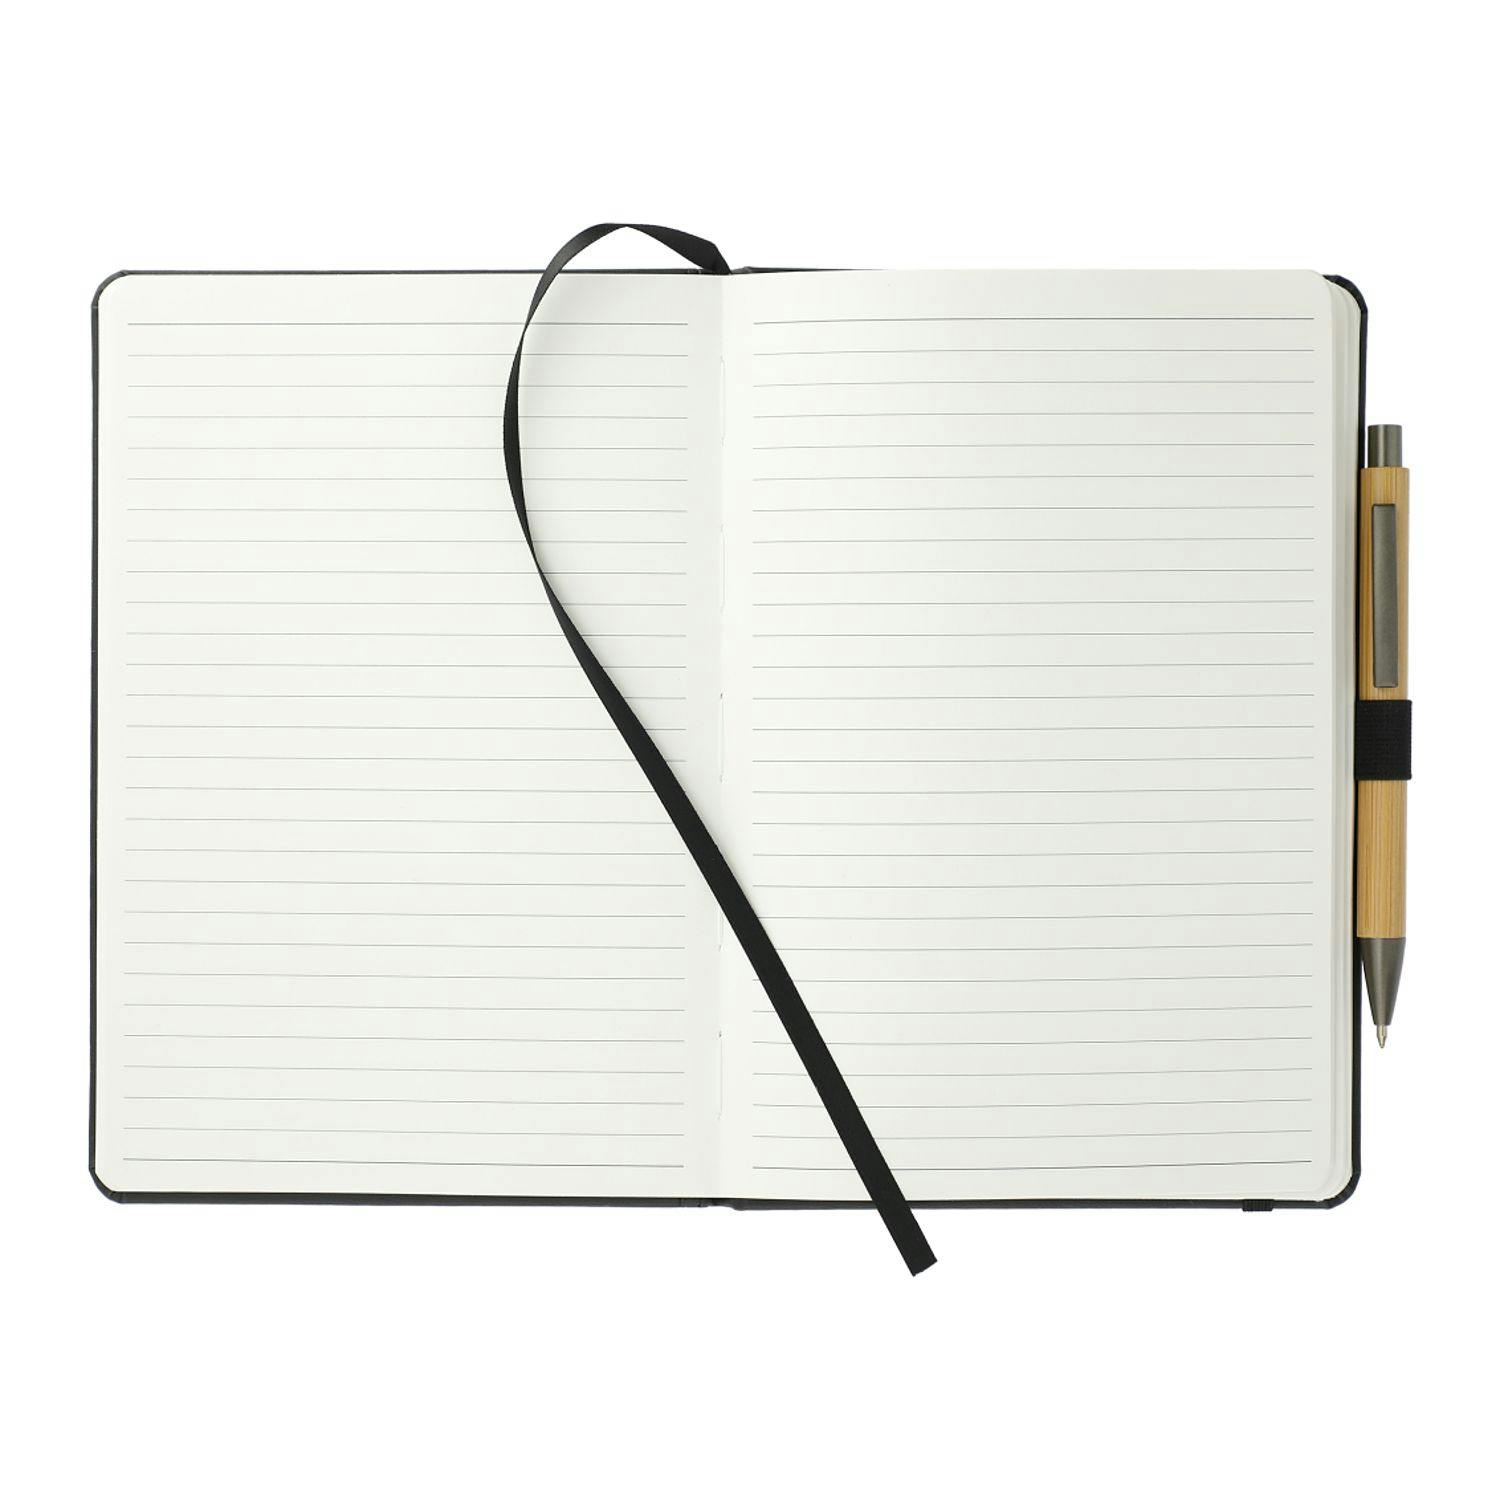 5.75" x 8.5" Pedova™ Pocket Bound JournalBook® - additional Image 2